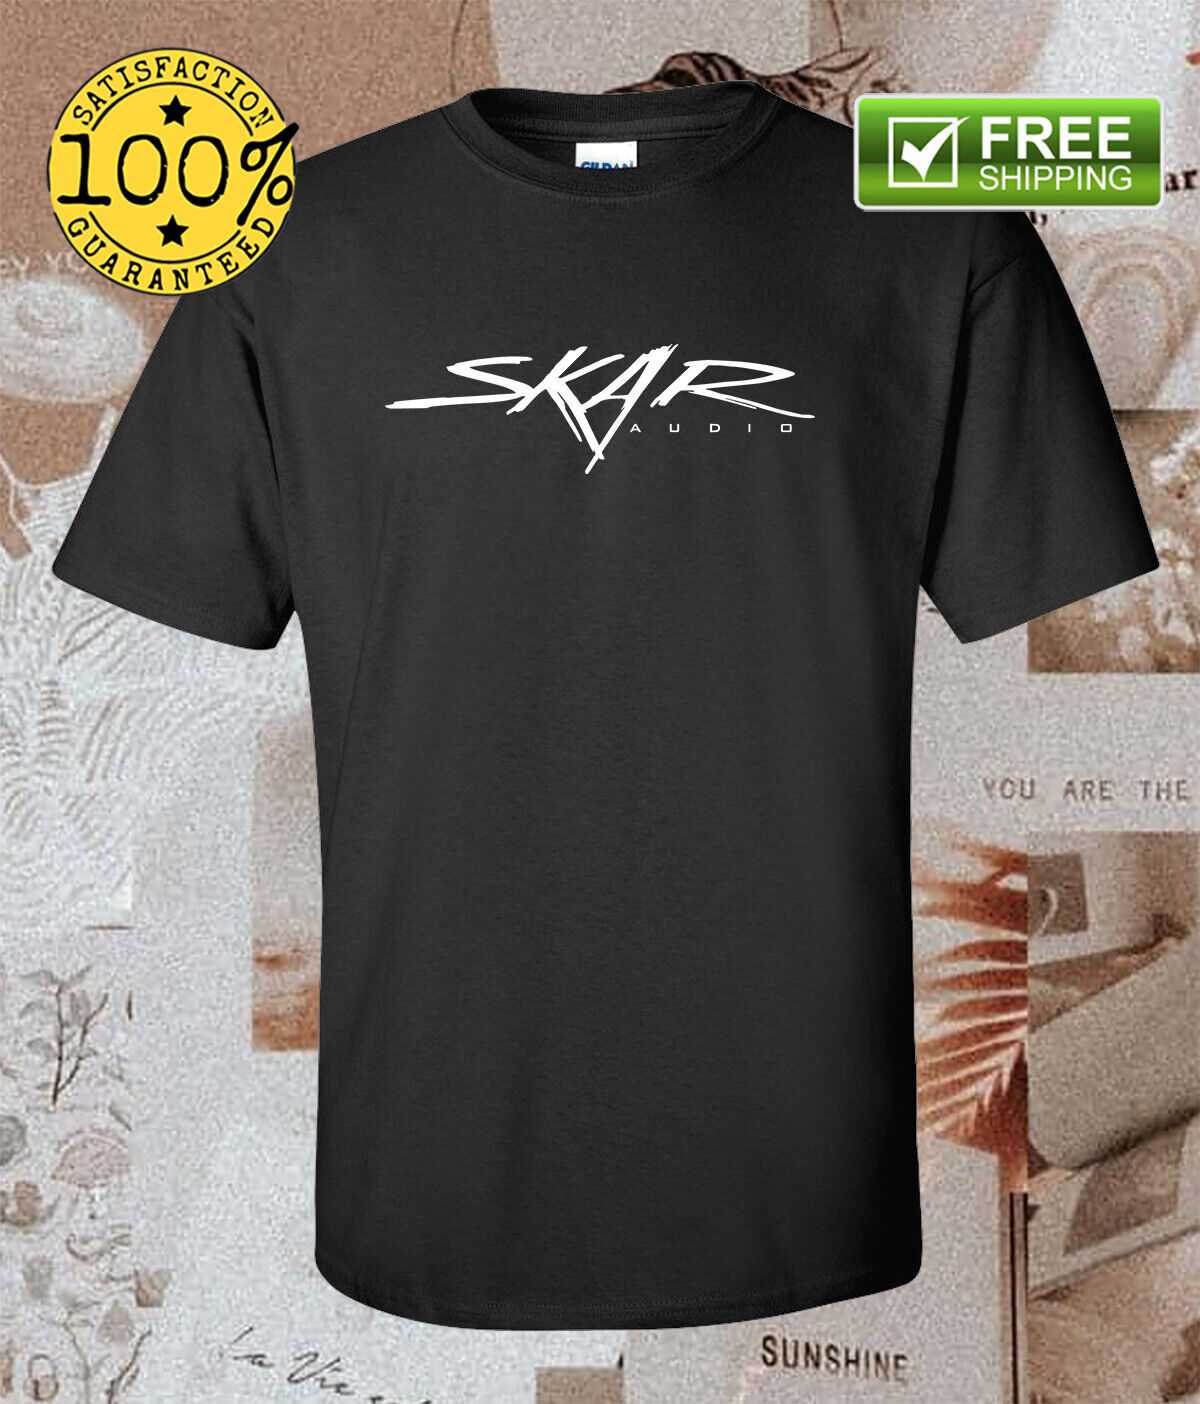 Skar Audio Logo Men's T-Shirt Size S to 5XL